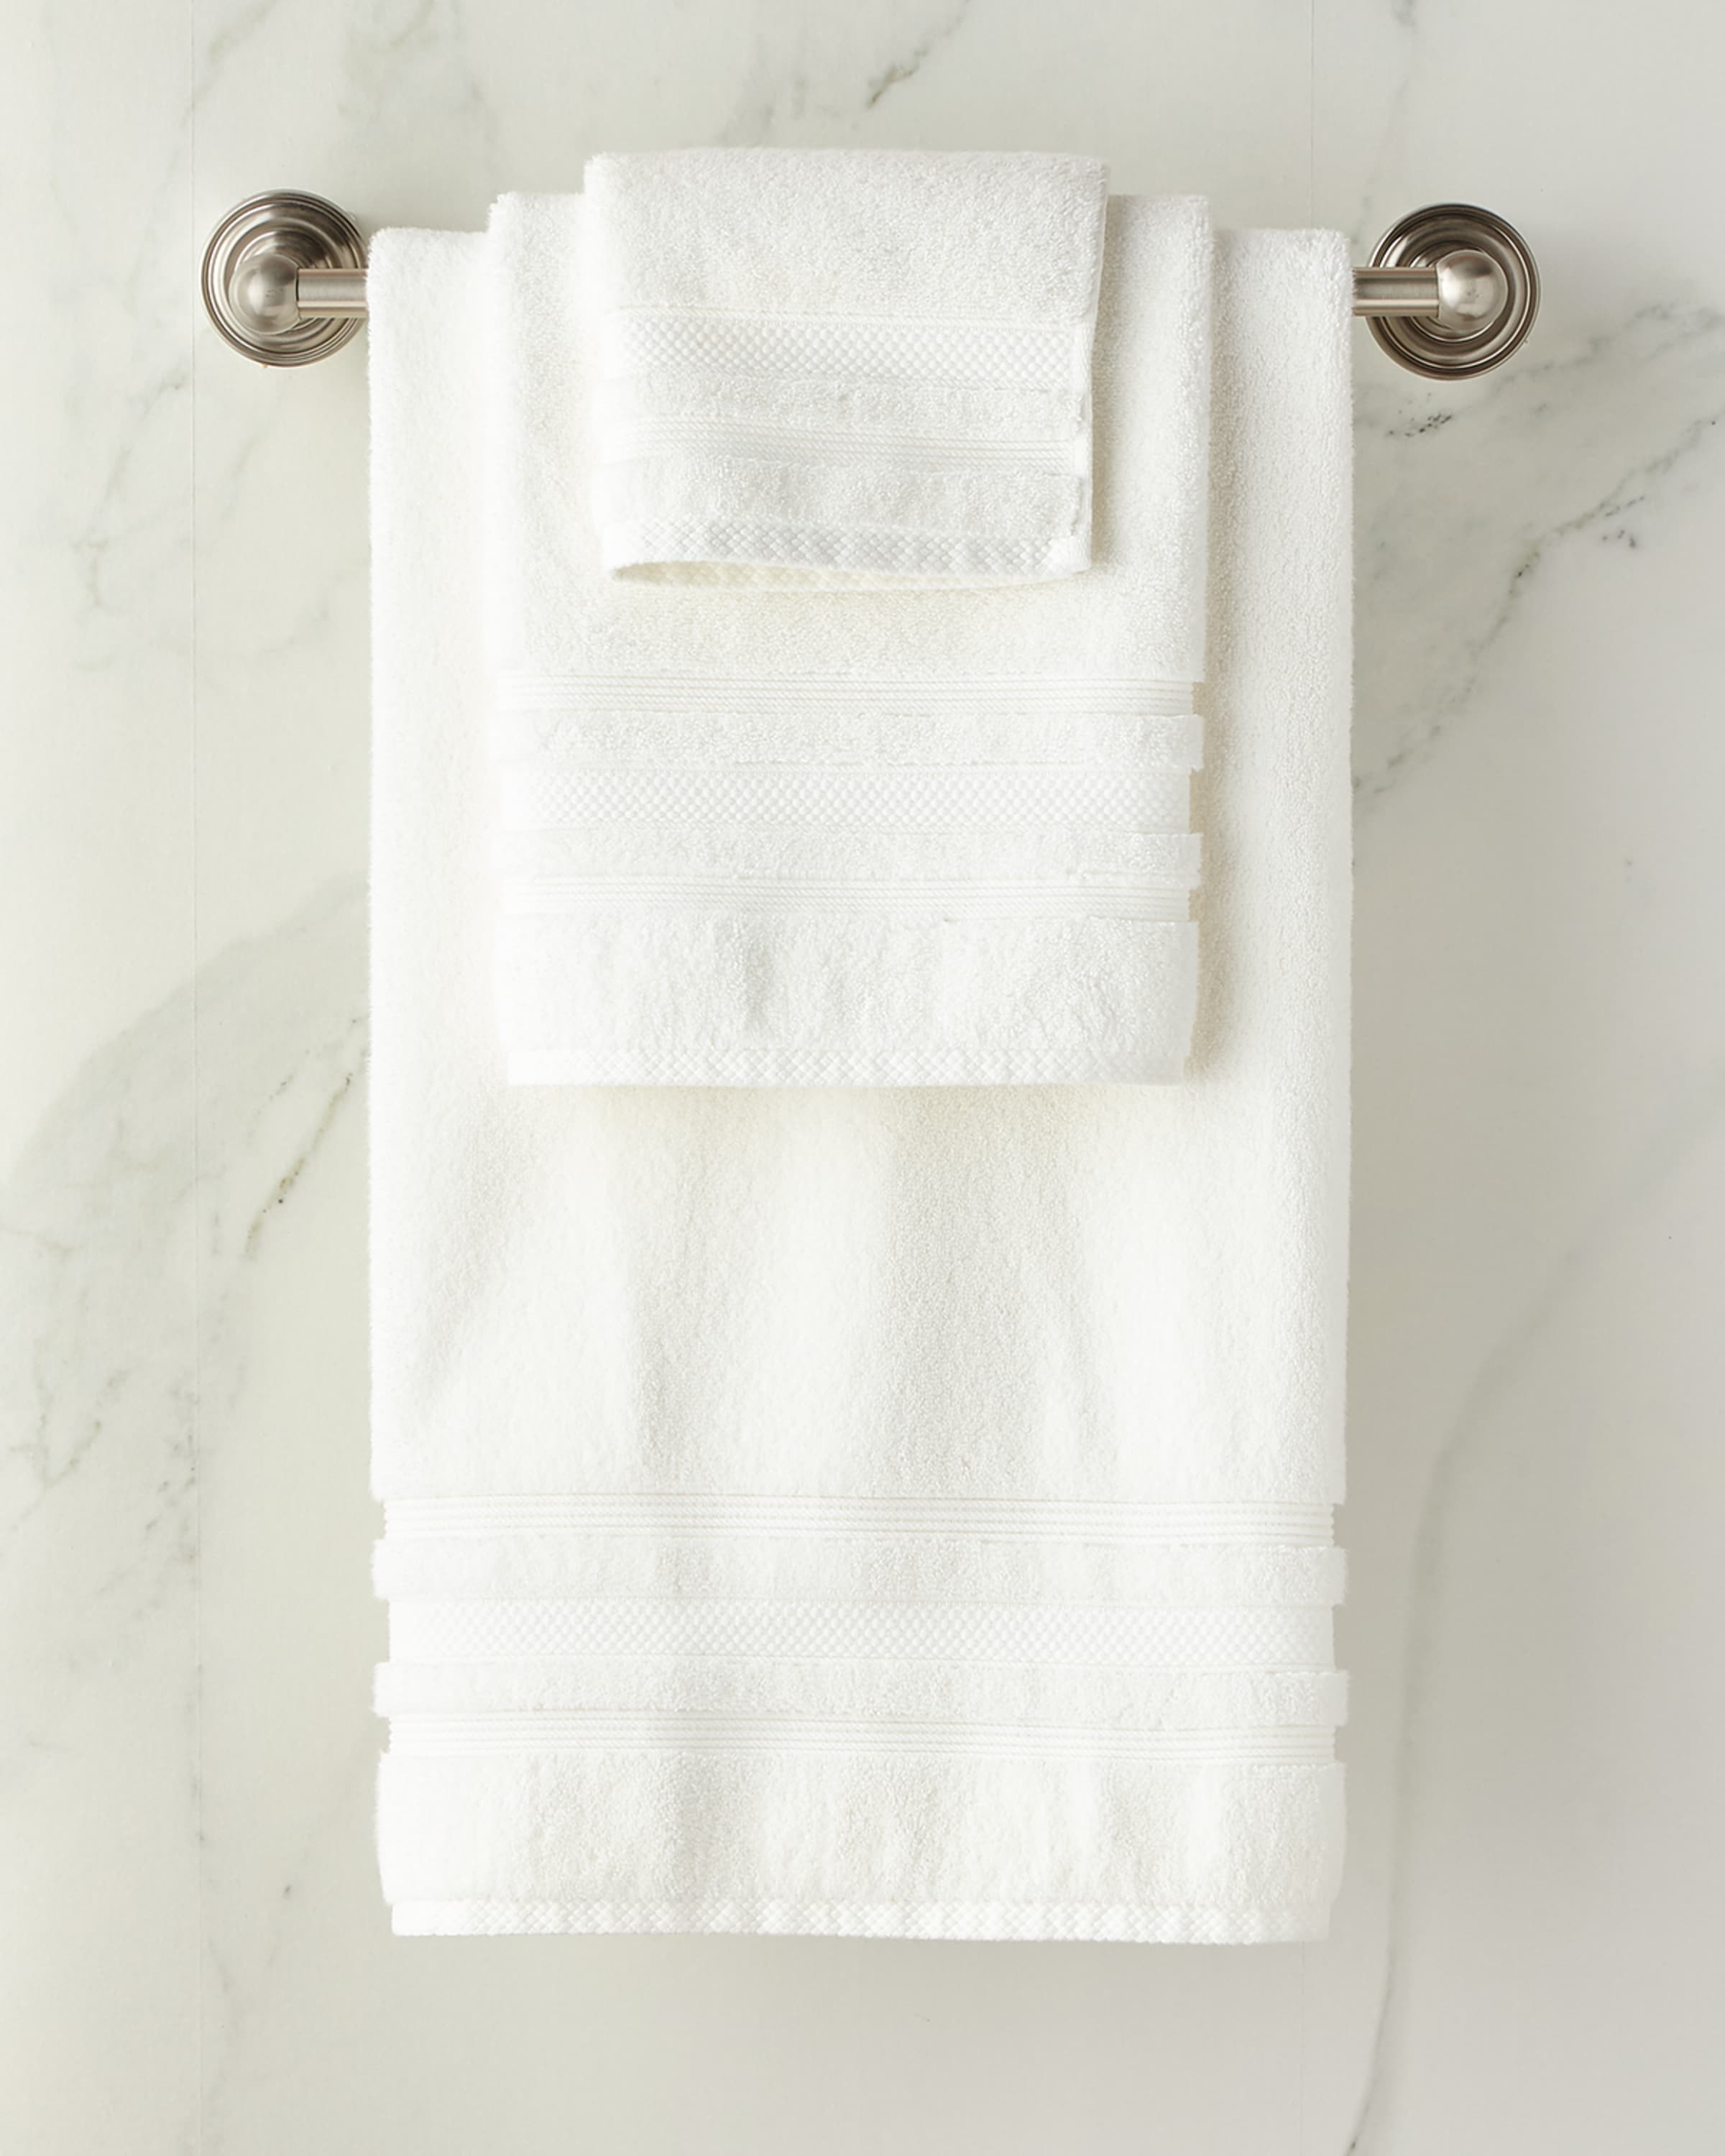 Charisma Luxe Bath Towel